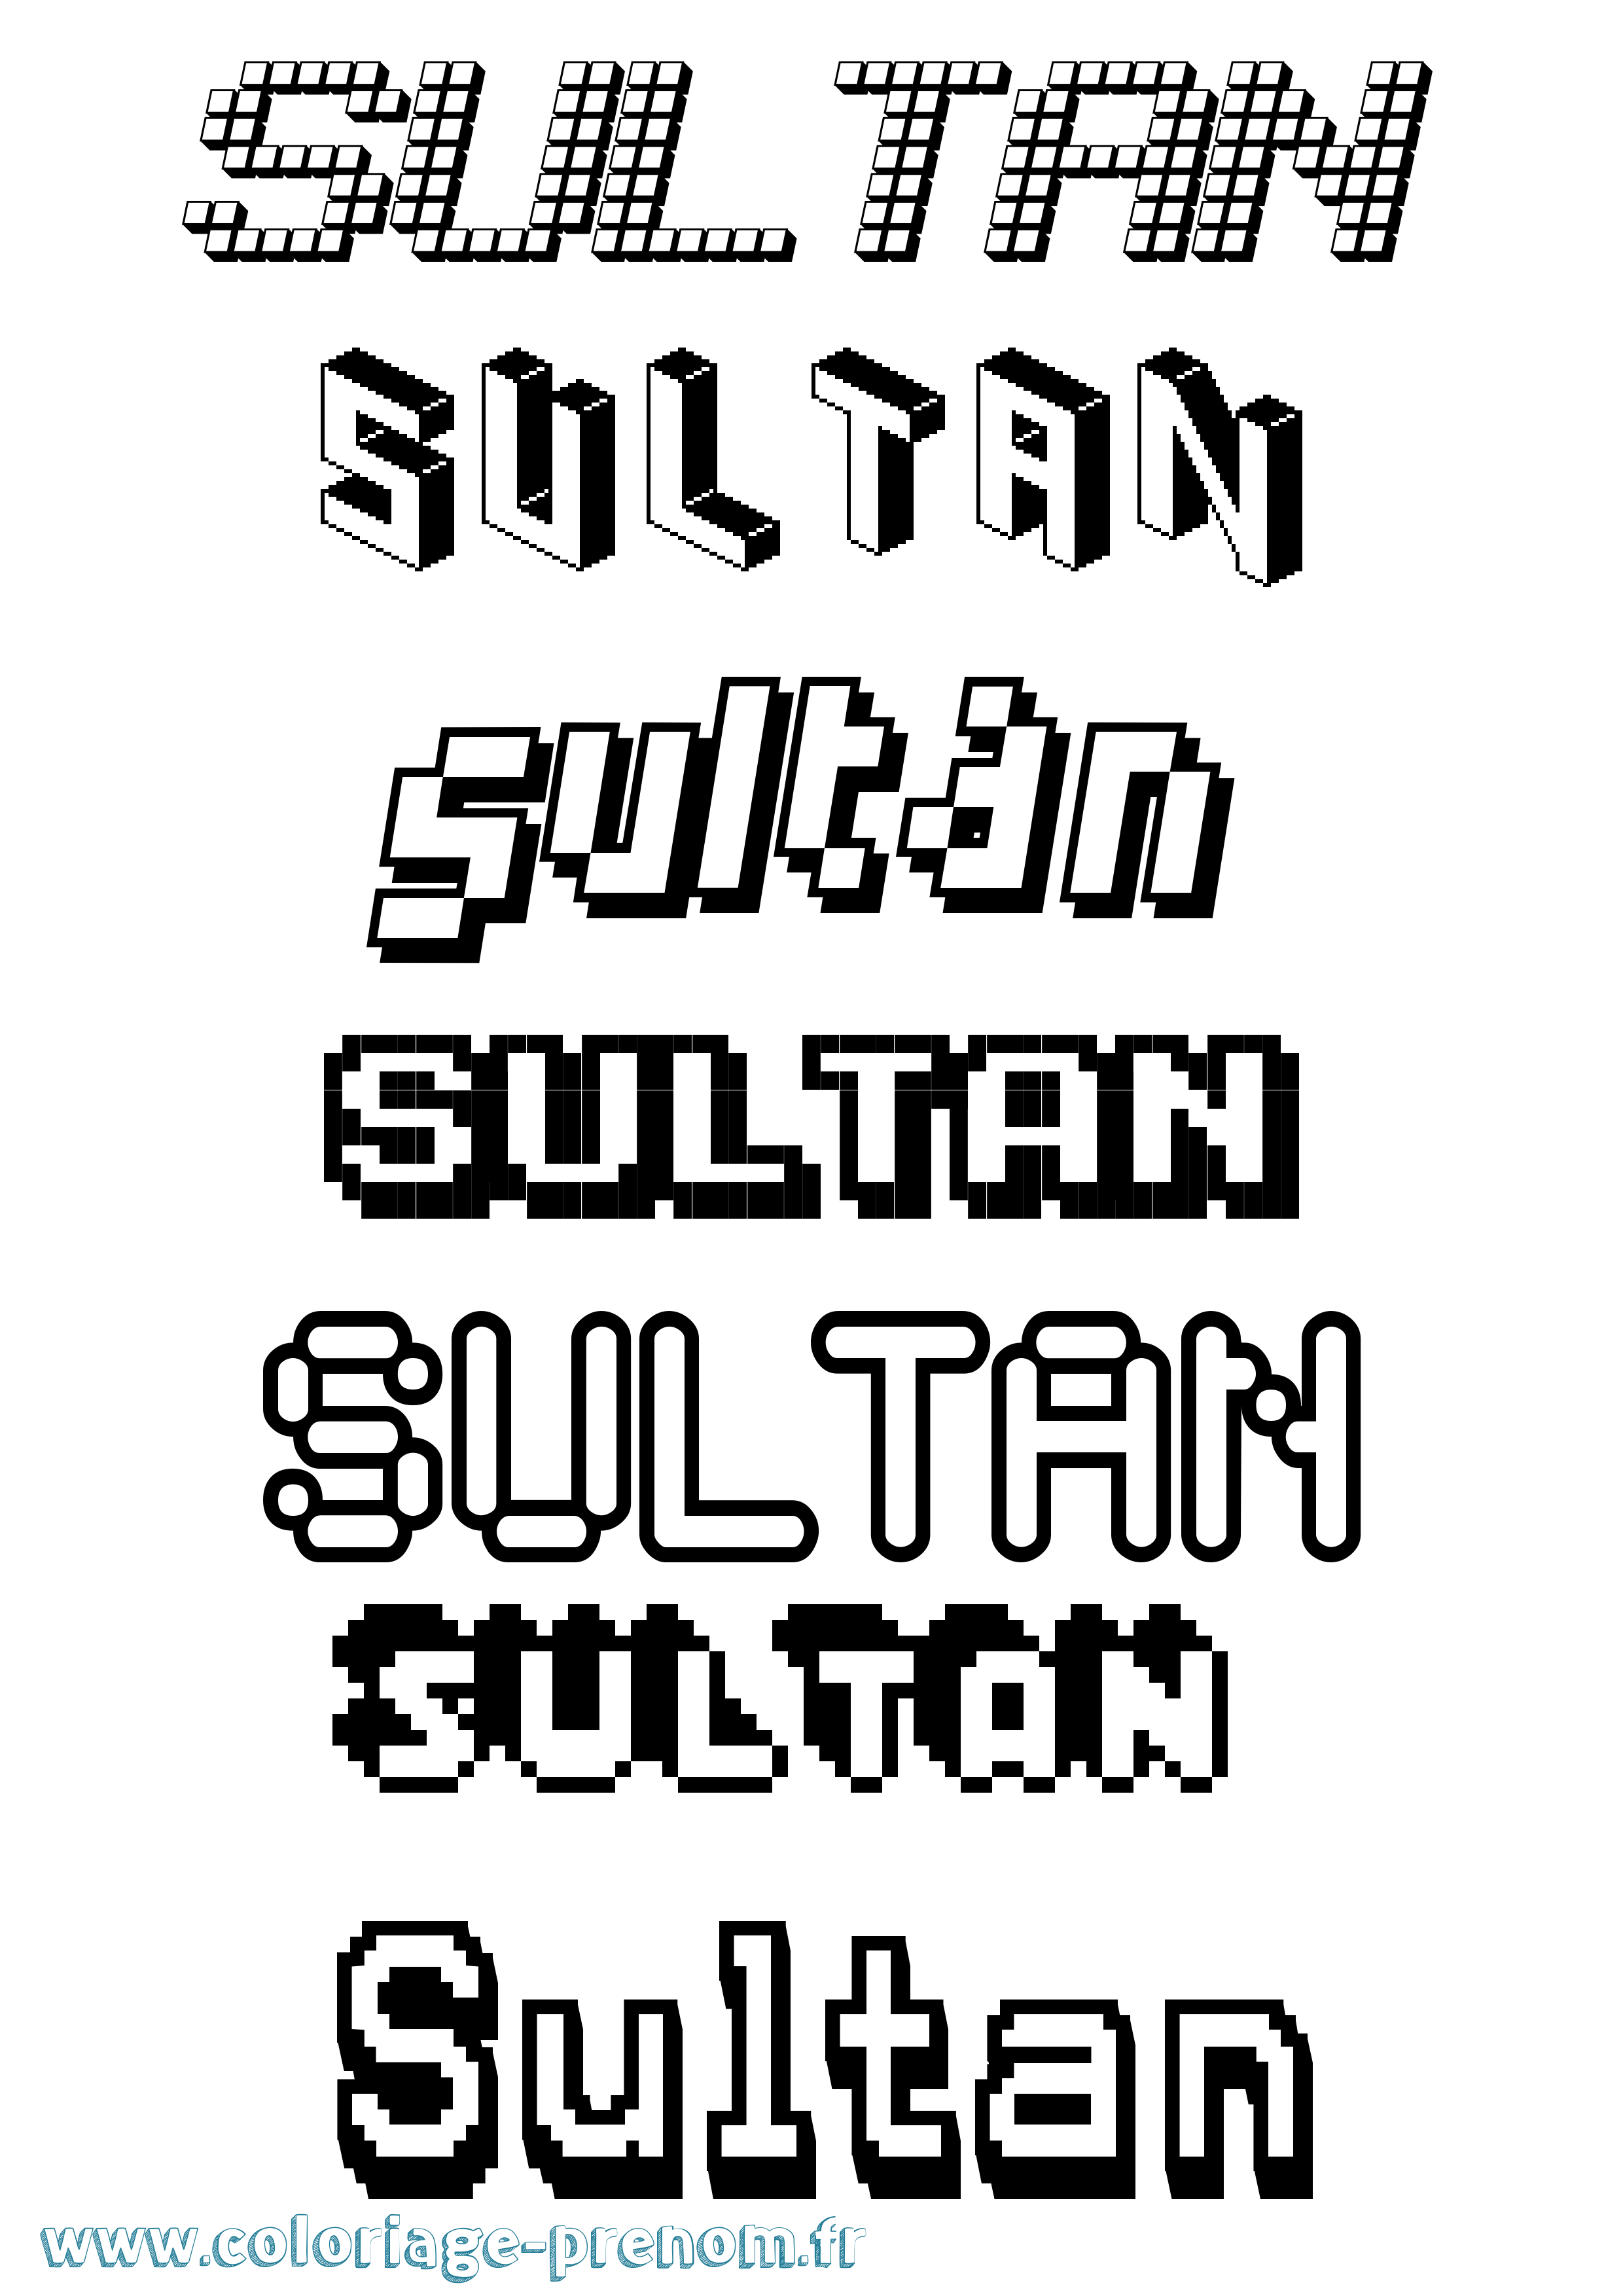 Coloriage prénom Sultan Pixel